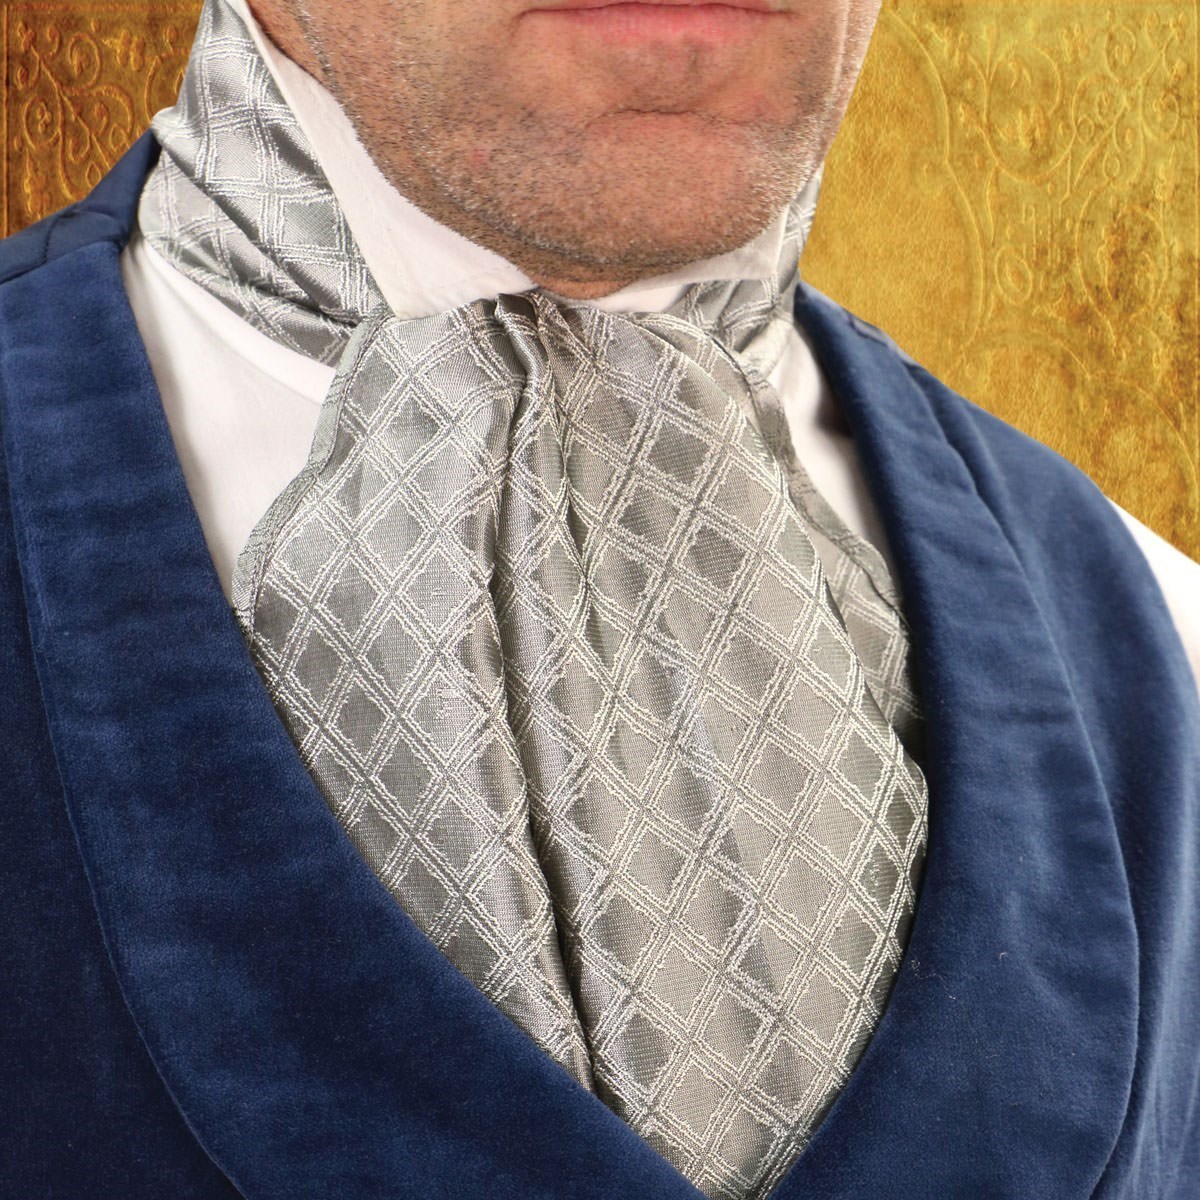 Victorian Cravat Pattern